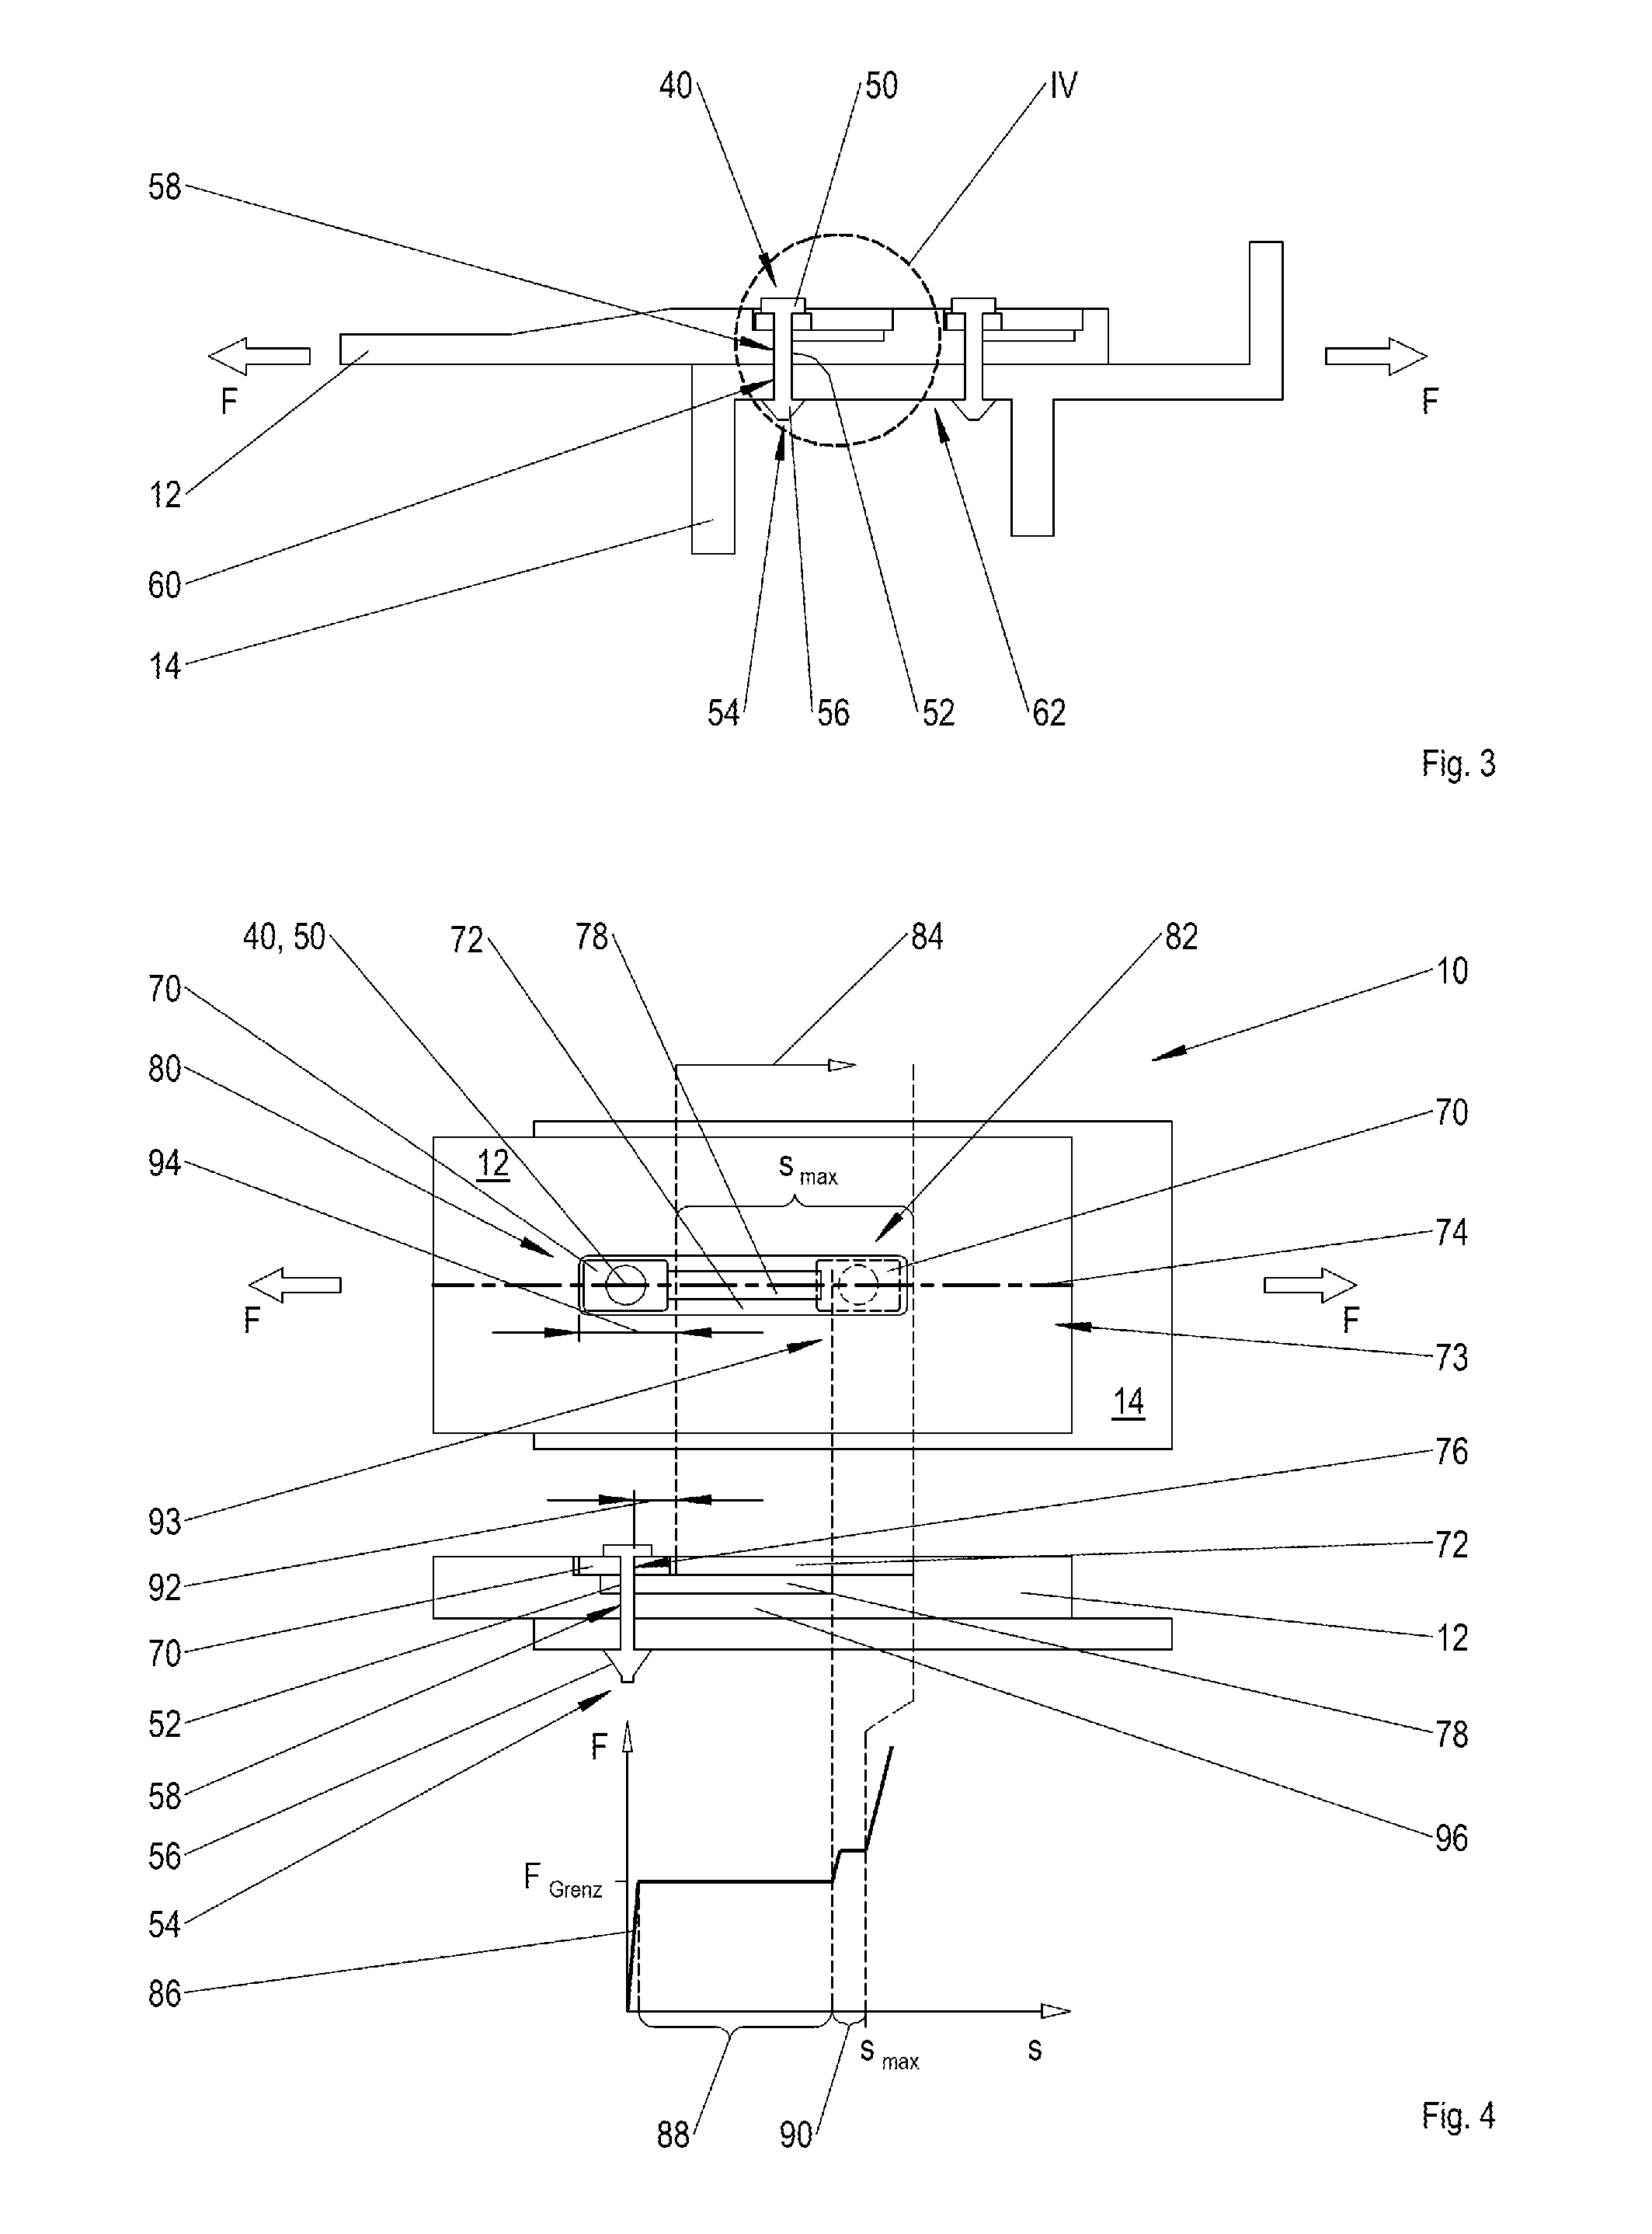 Connection arrangement and structure